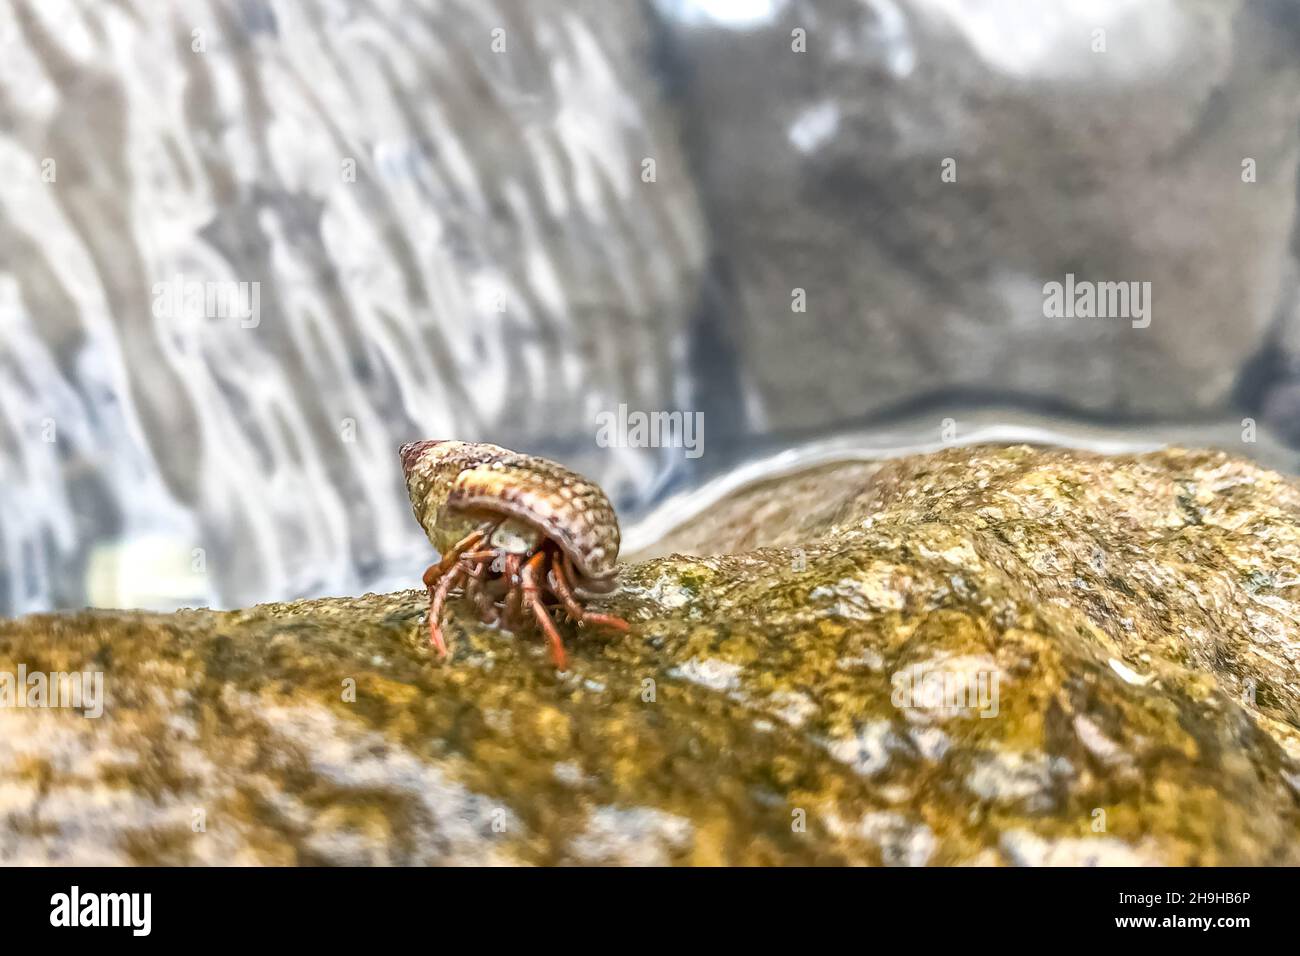 A small sea crab on a wet stone. Marine fauna. Stock Photo